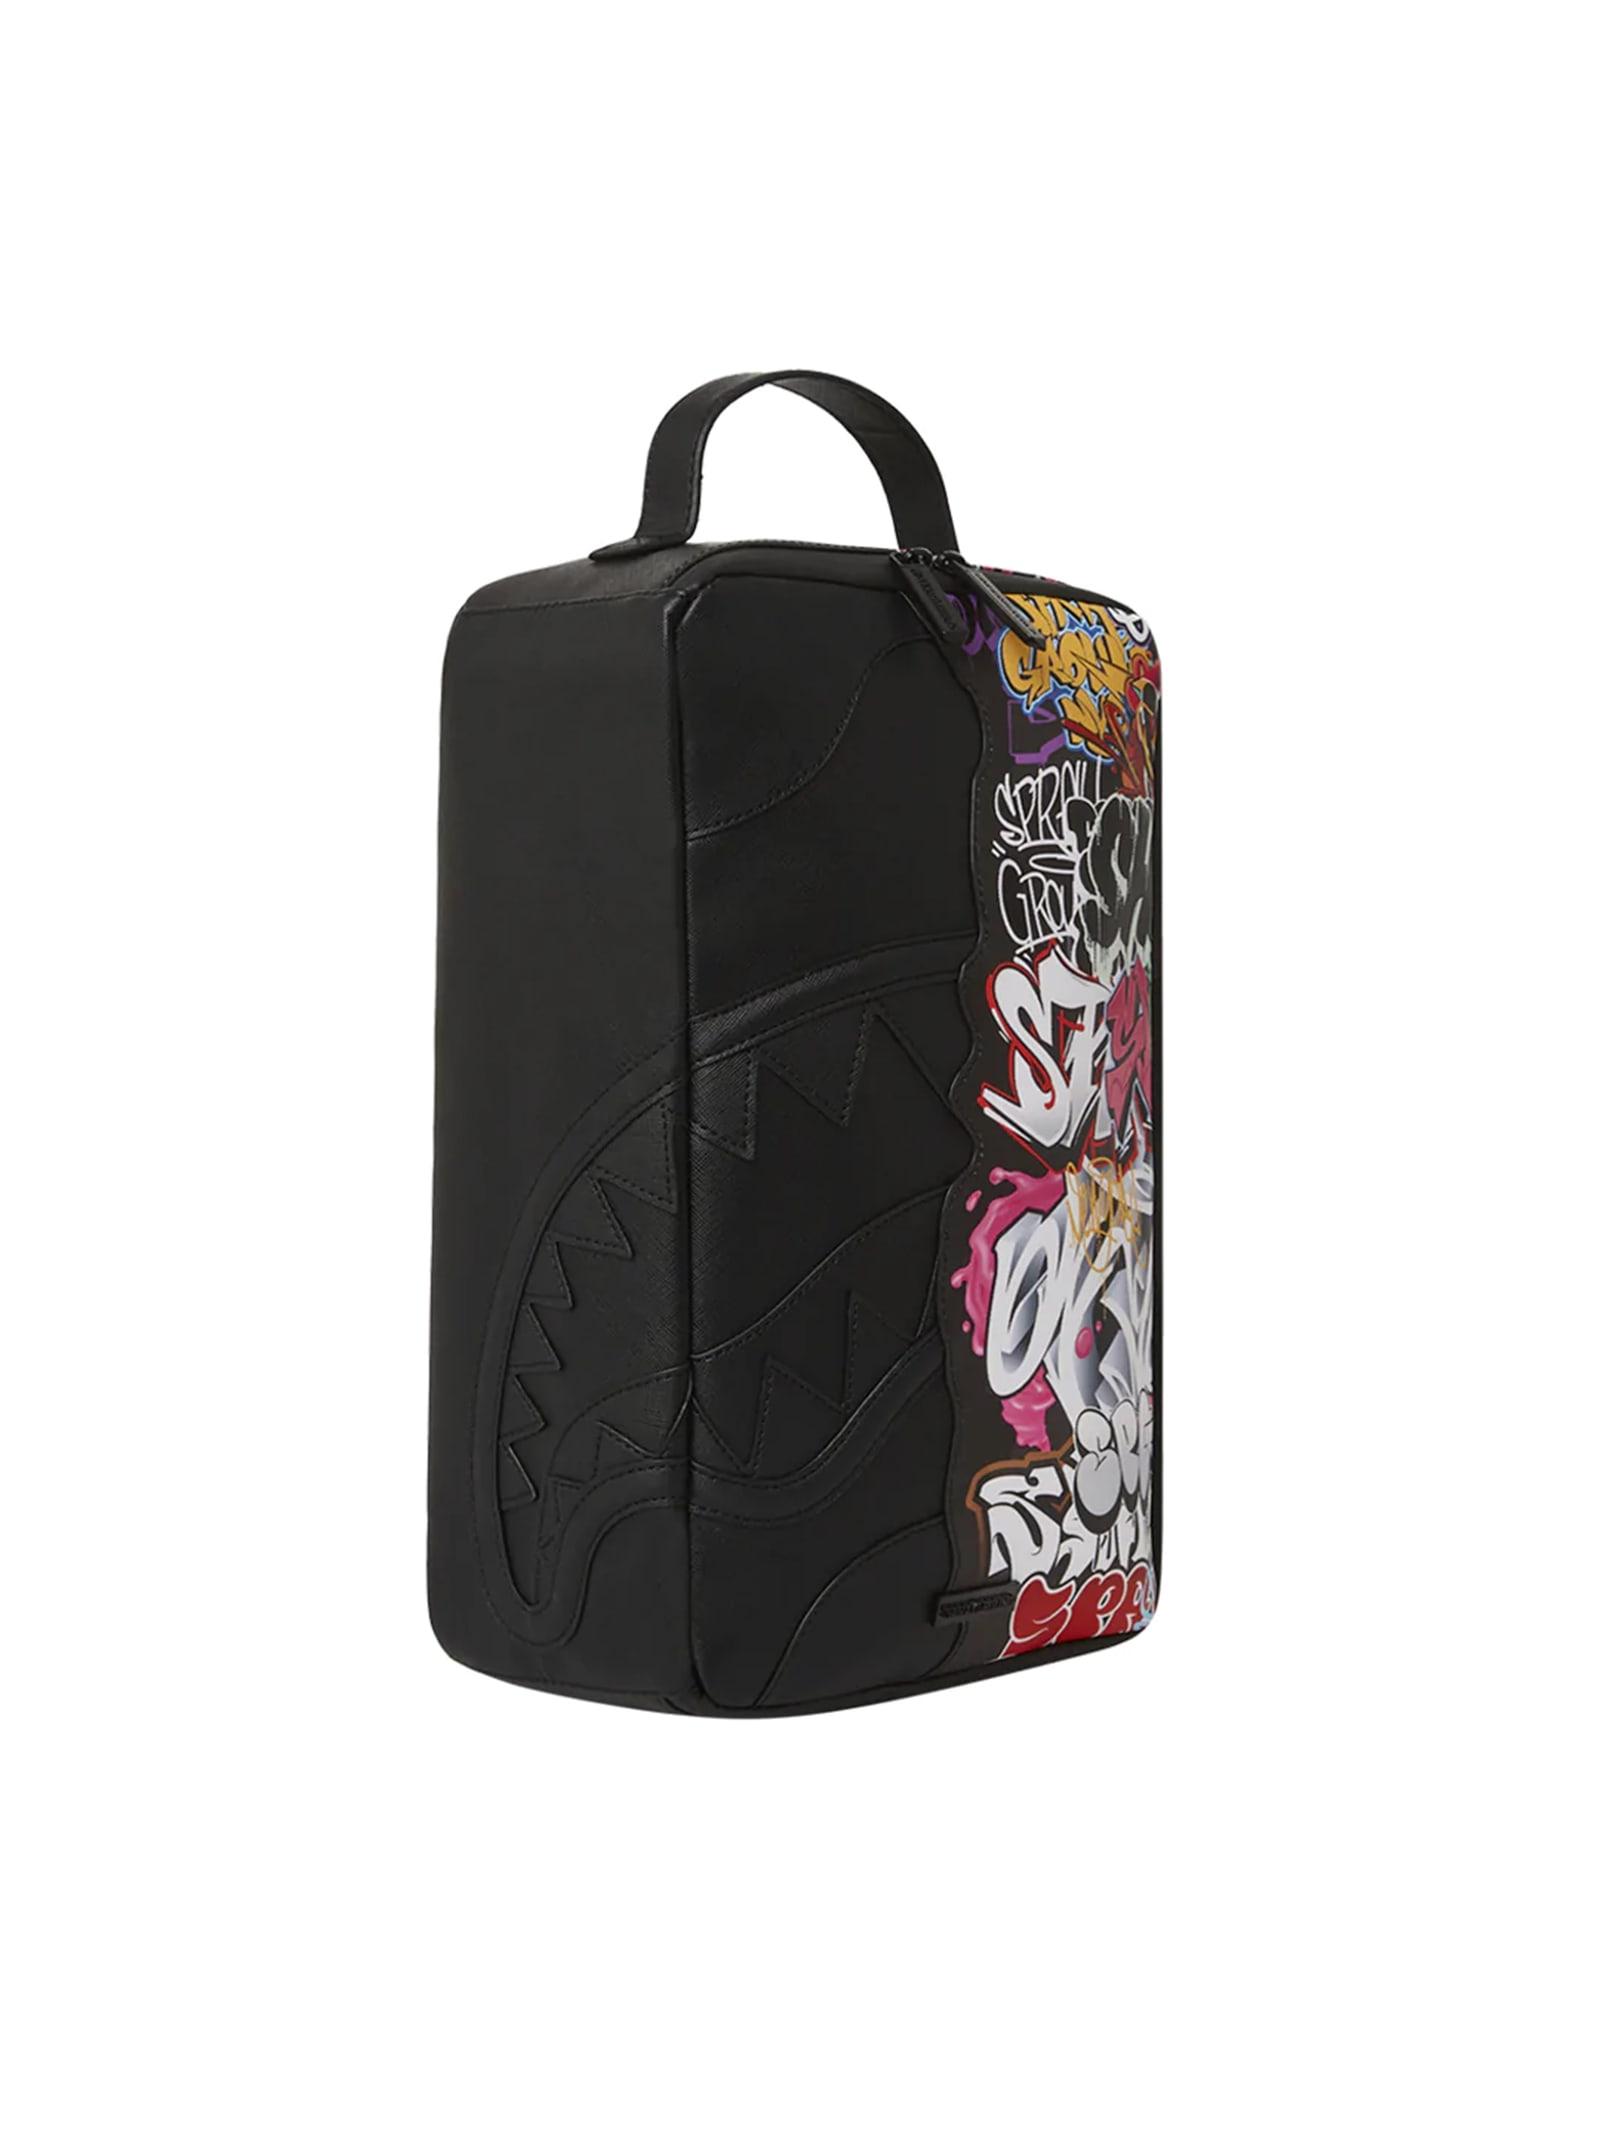 Sprayground Black Gold Half Graff Backpack Laptop Books Bag School